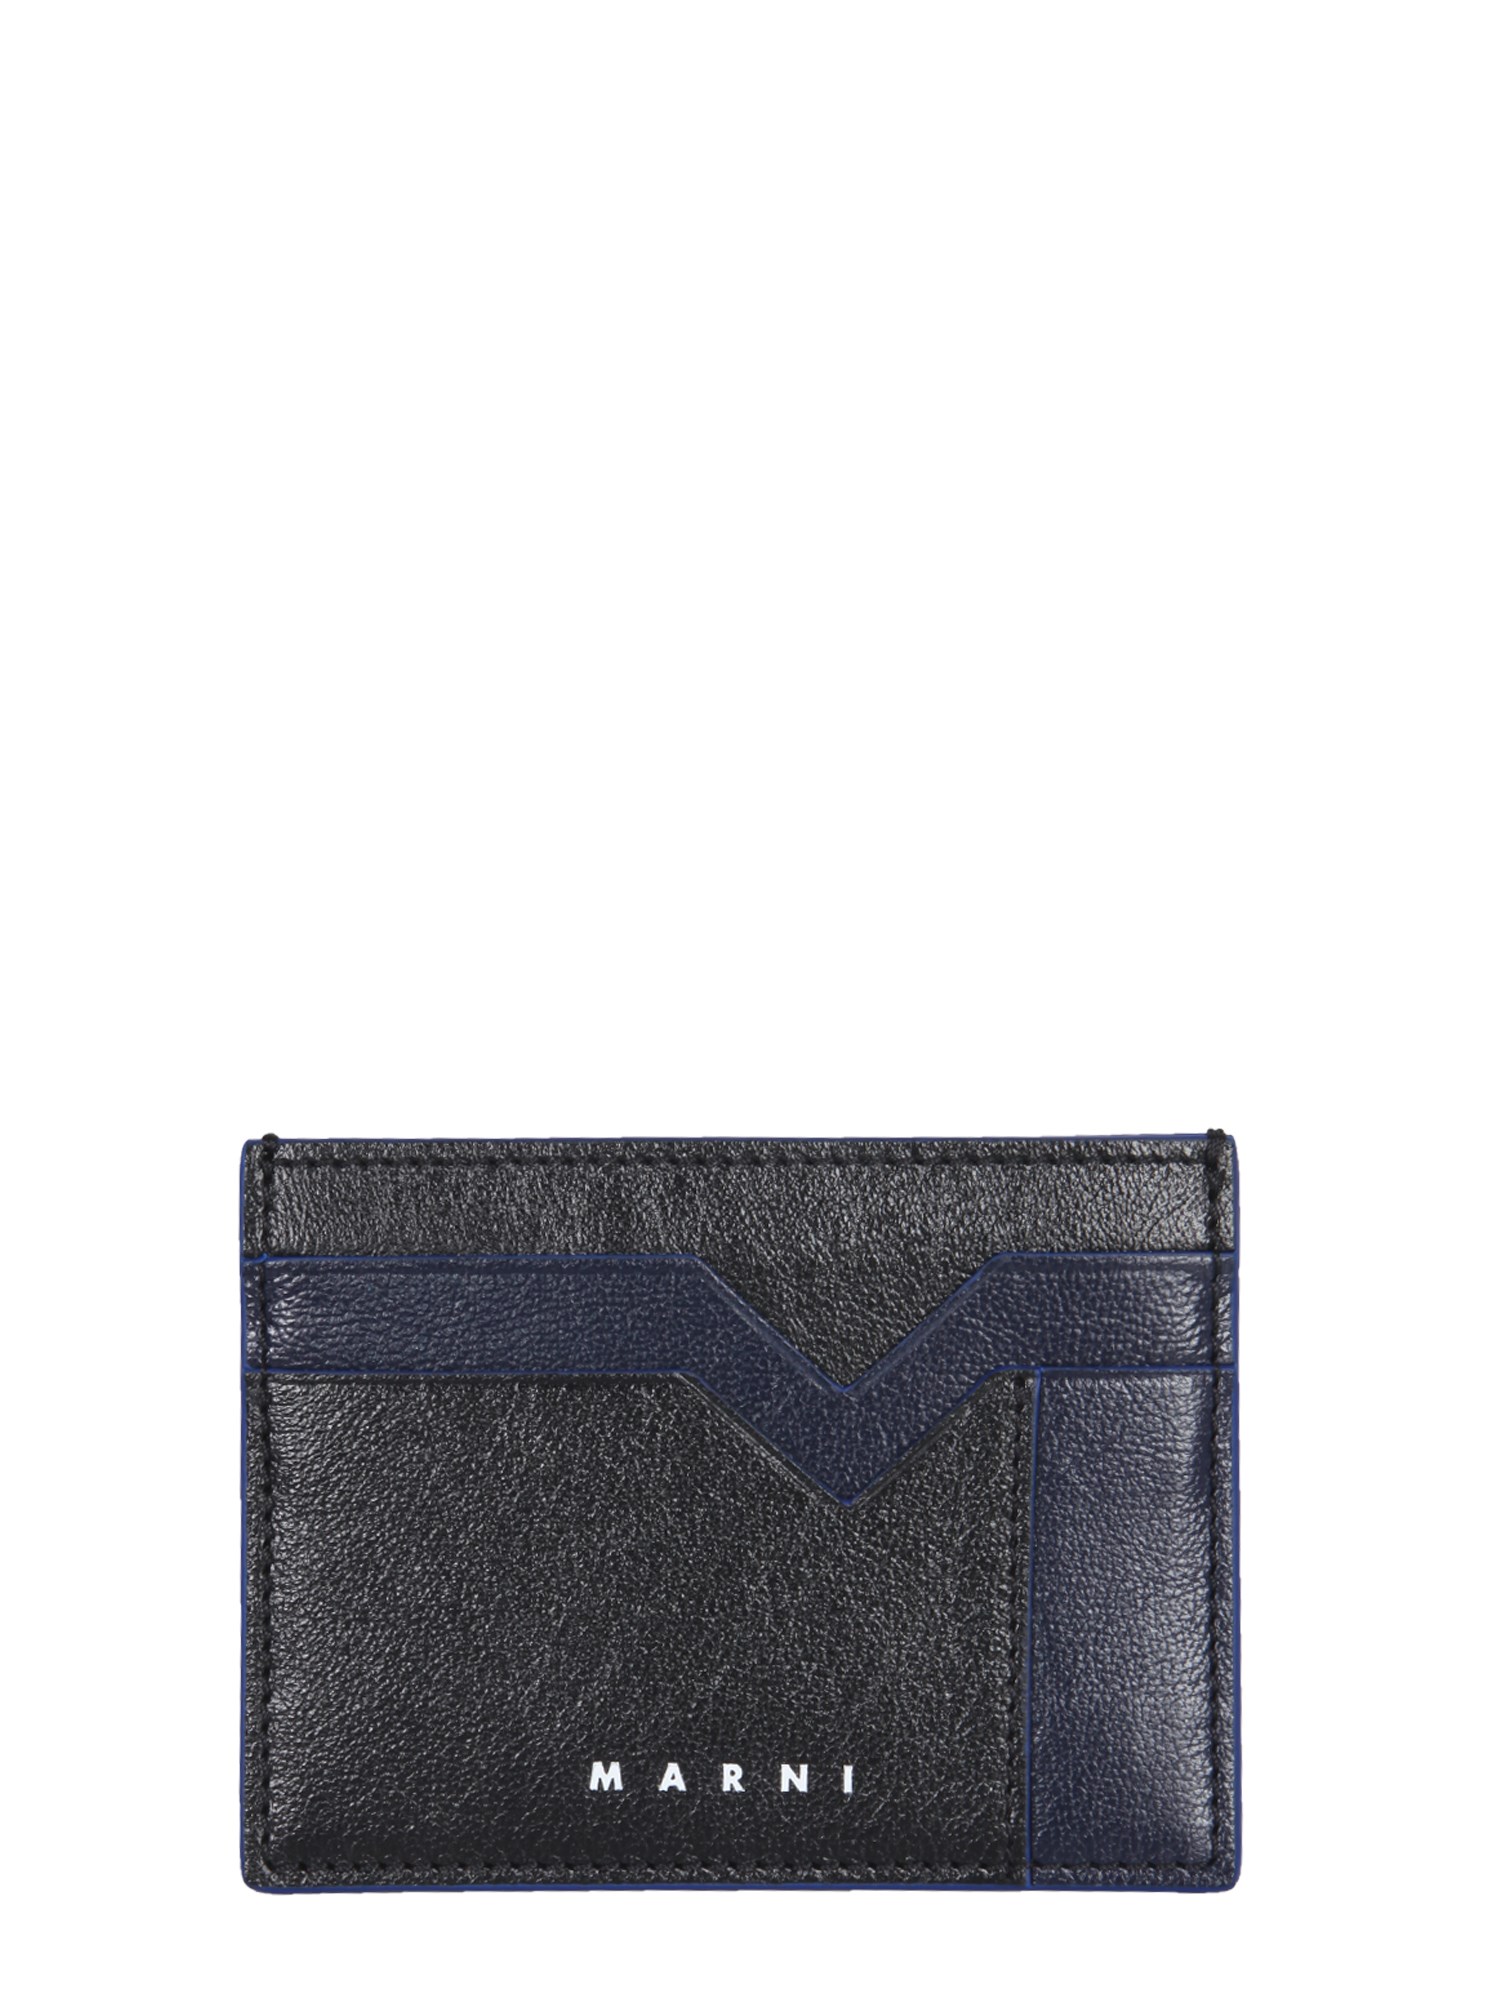 marni bicolor leather card holder